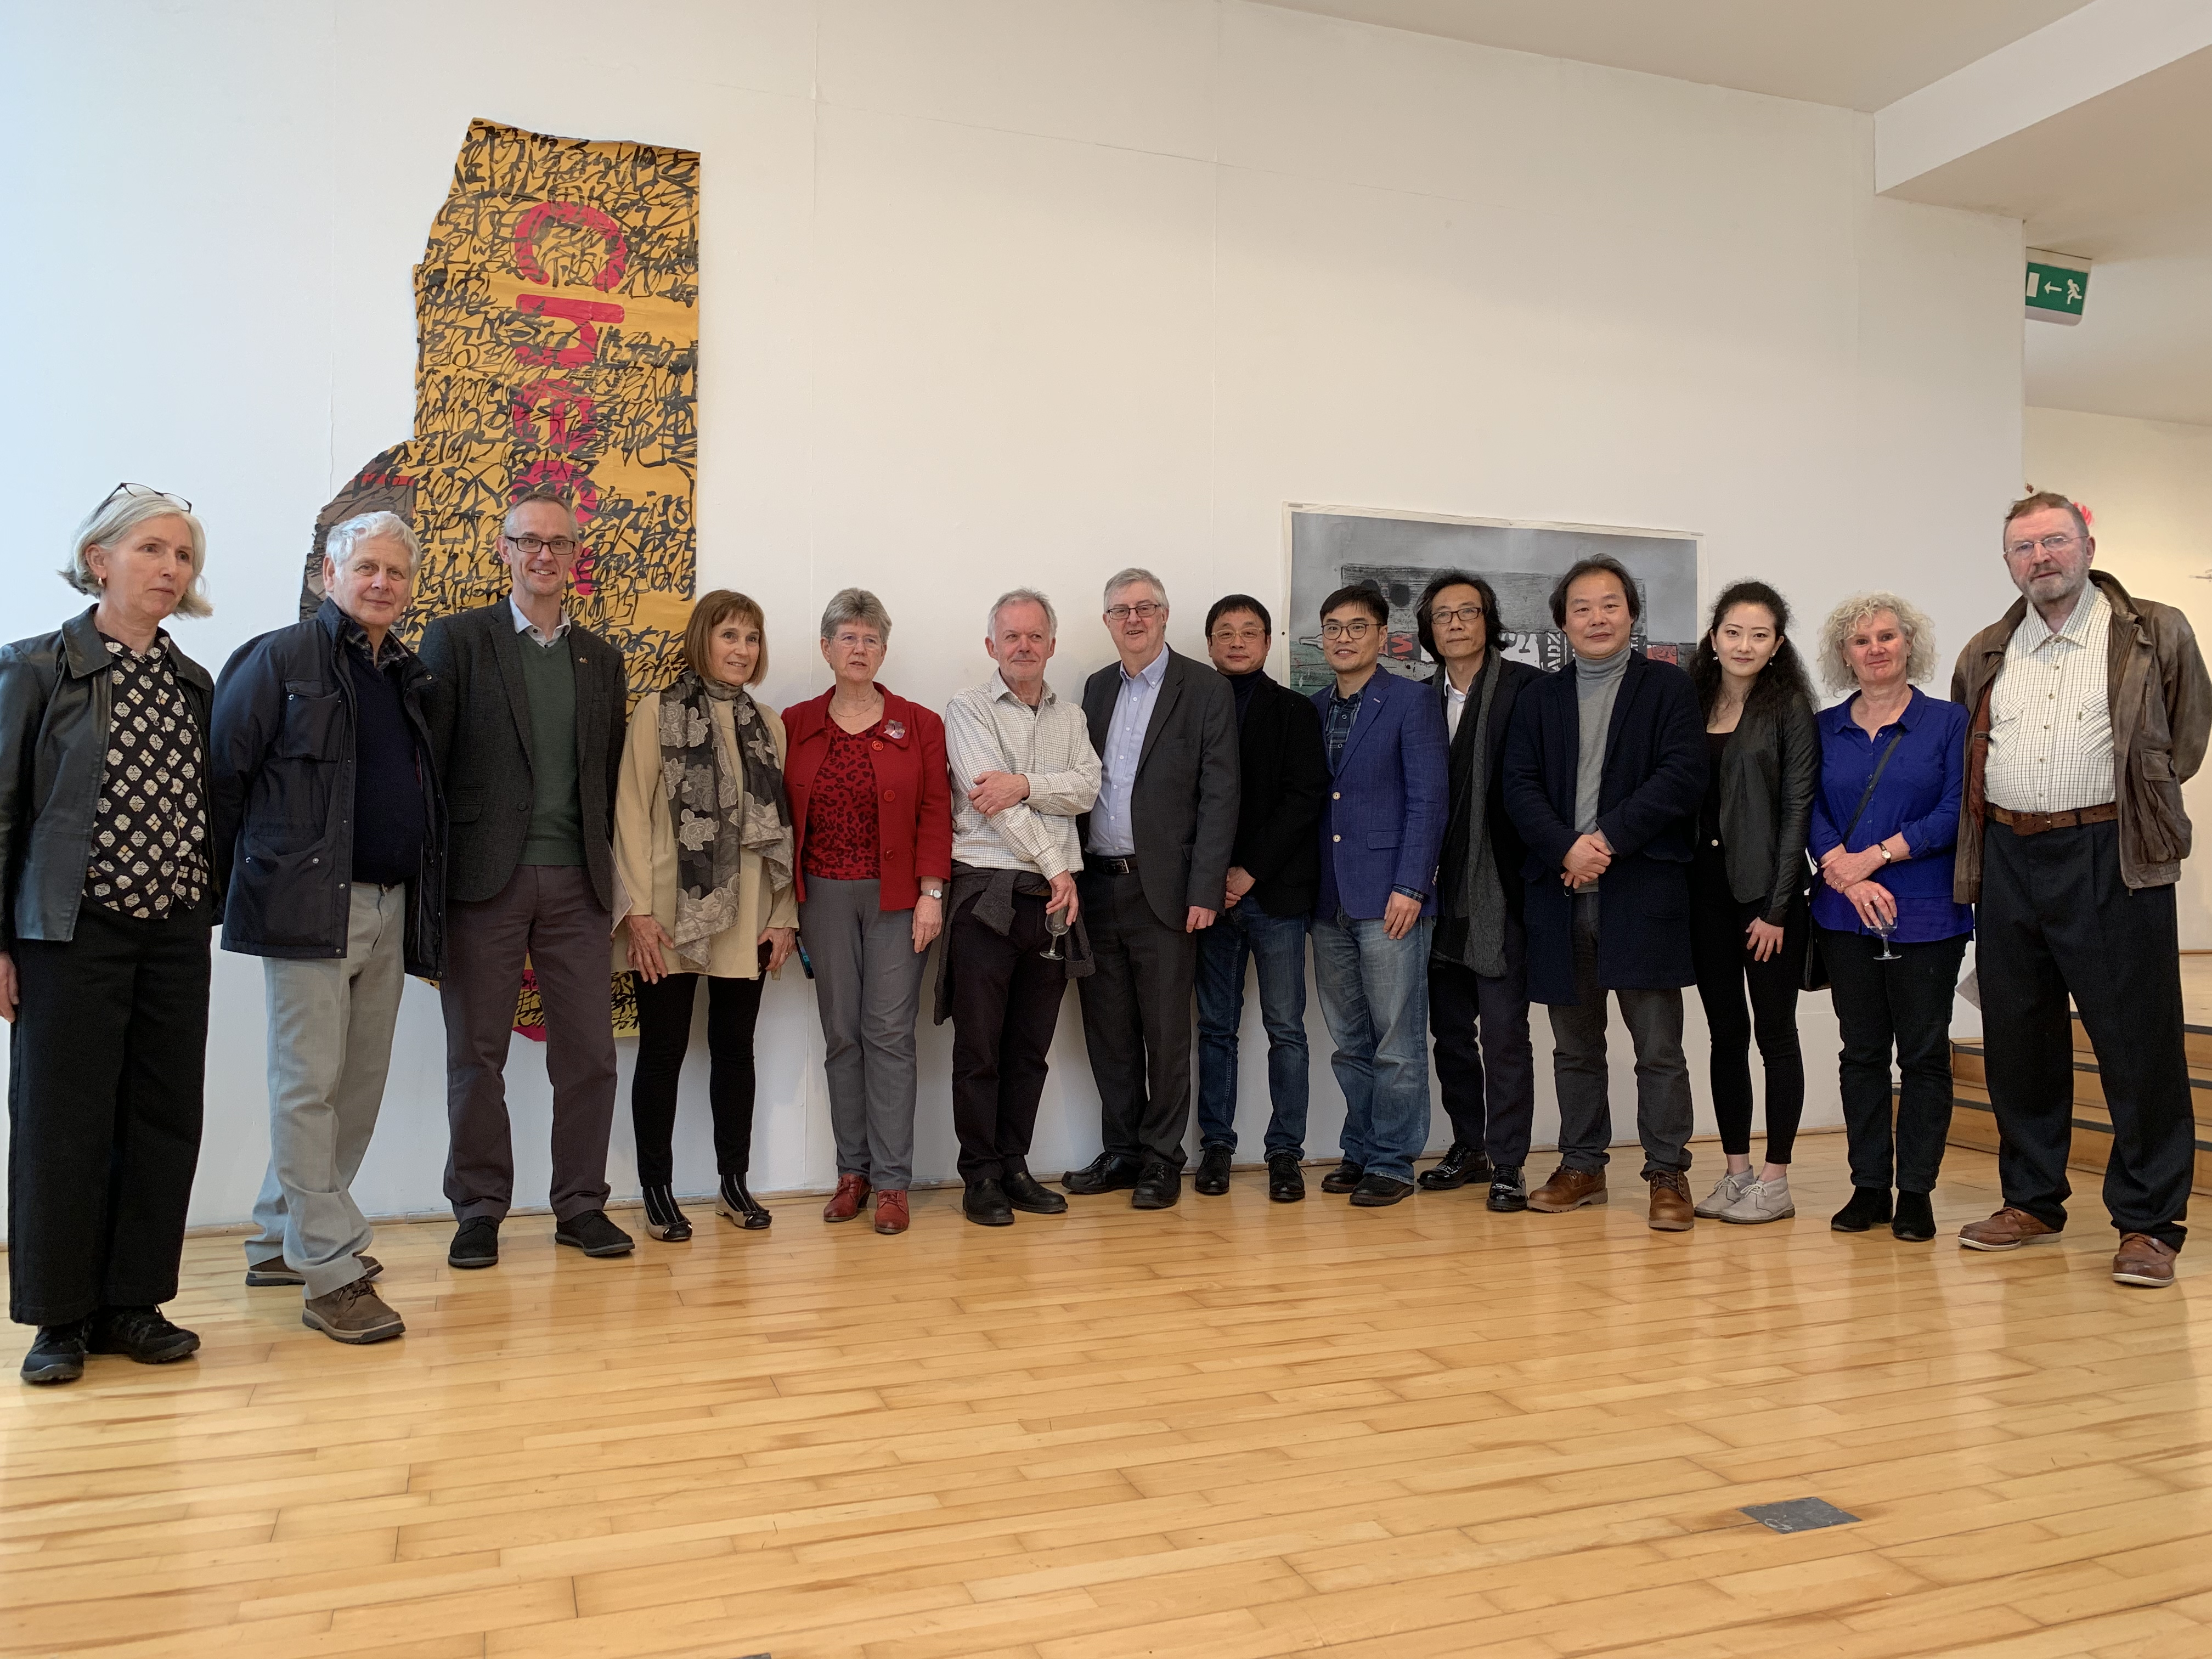 《Paper Exchange 》（英国国家艺术基金项目）展开幕现场，威尔士首相Mark Drakeford、前首相Jane Hutt 、外务大臣等出席。英国威尔士加迪夫2019年 